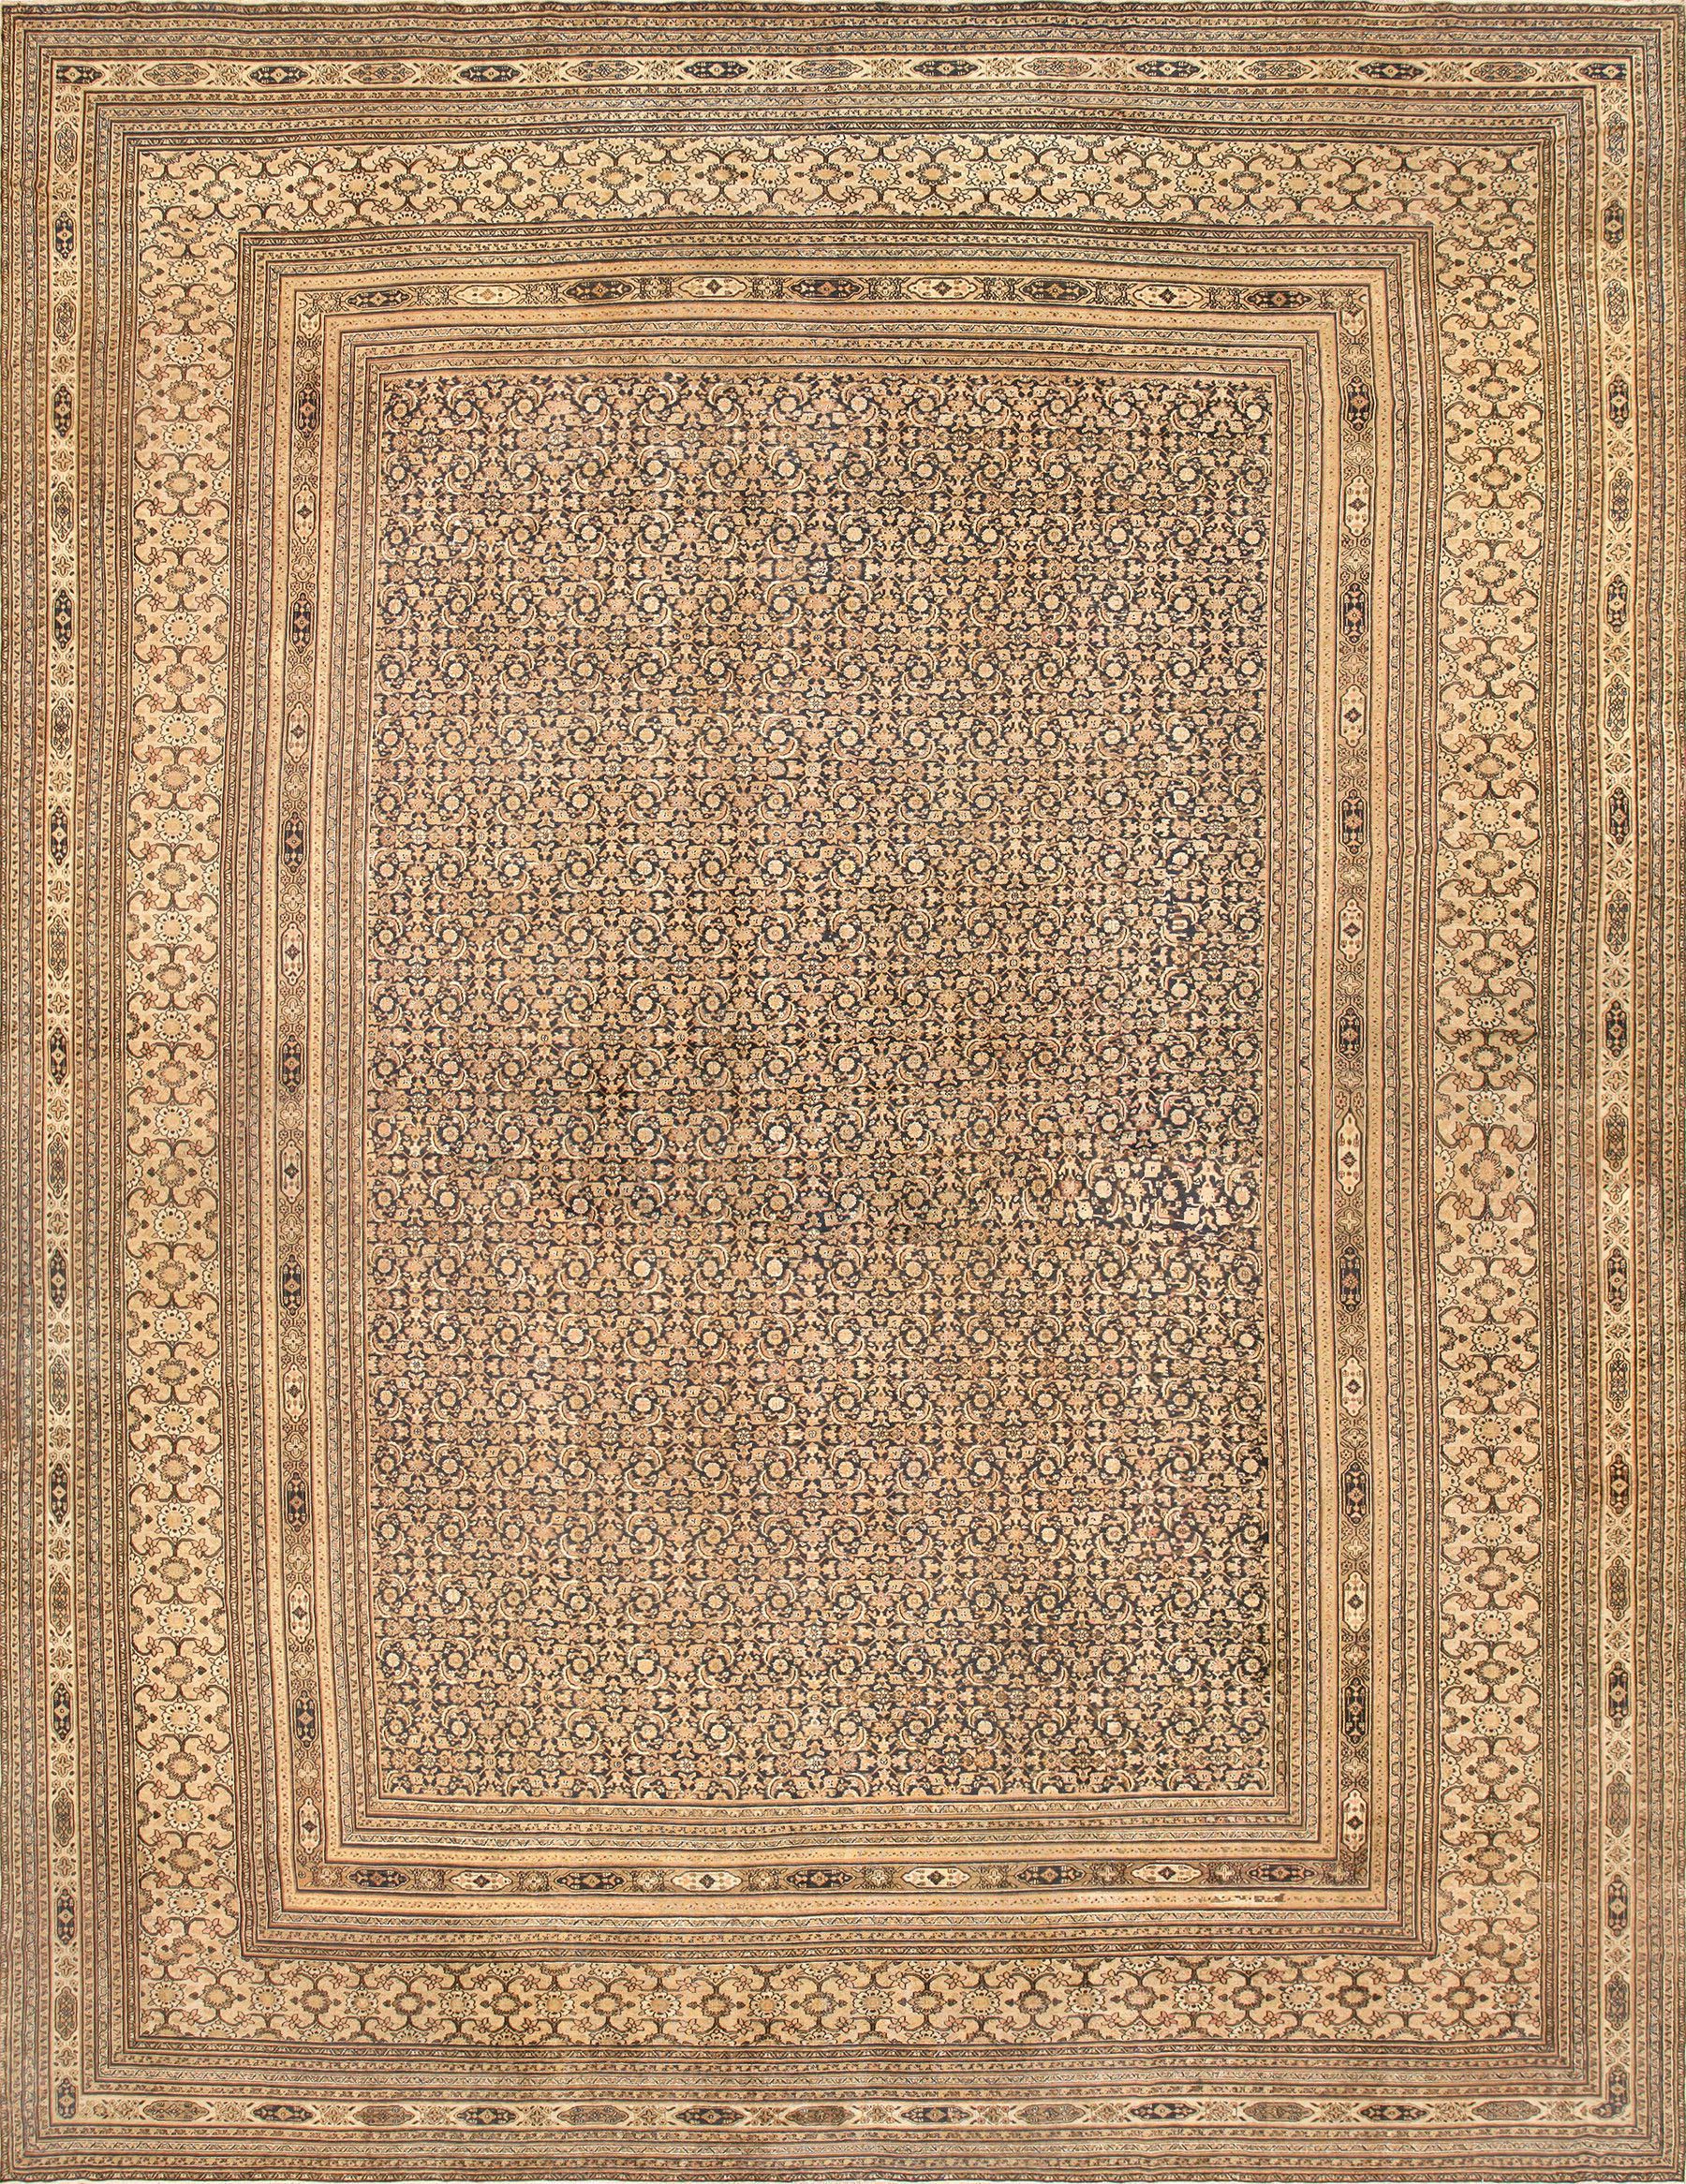 Herati Pattern In Rugs